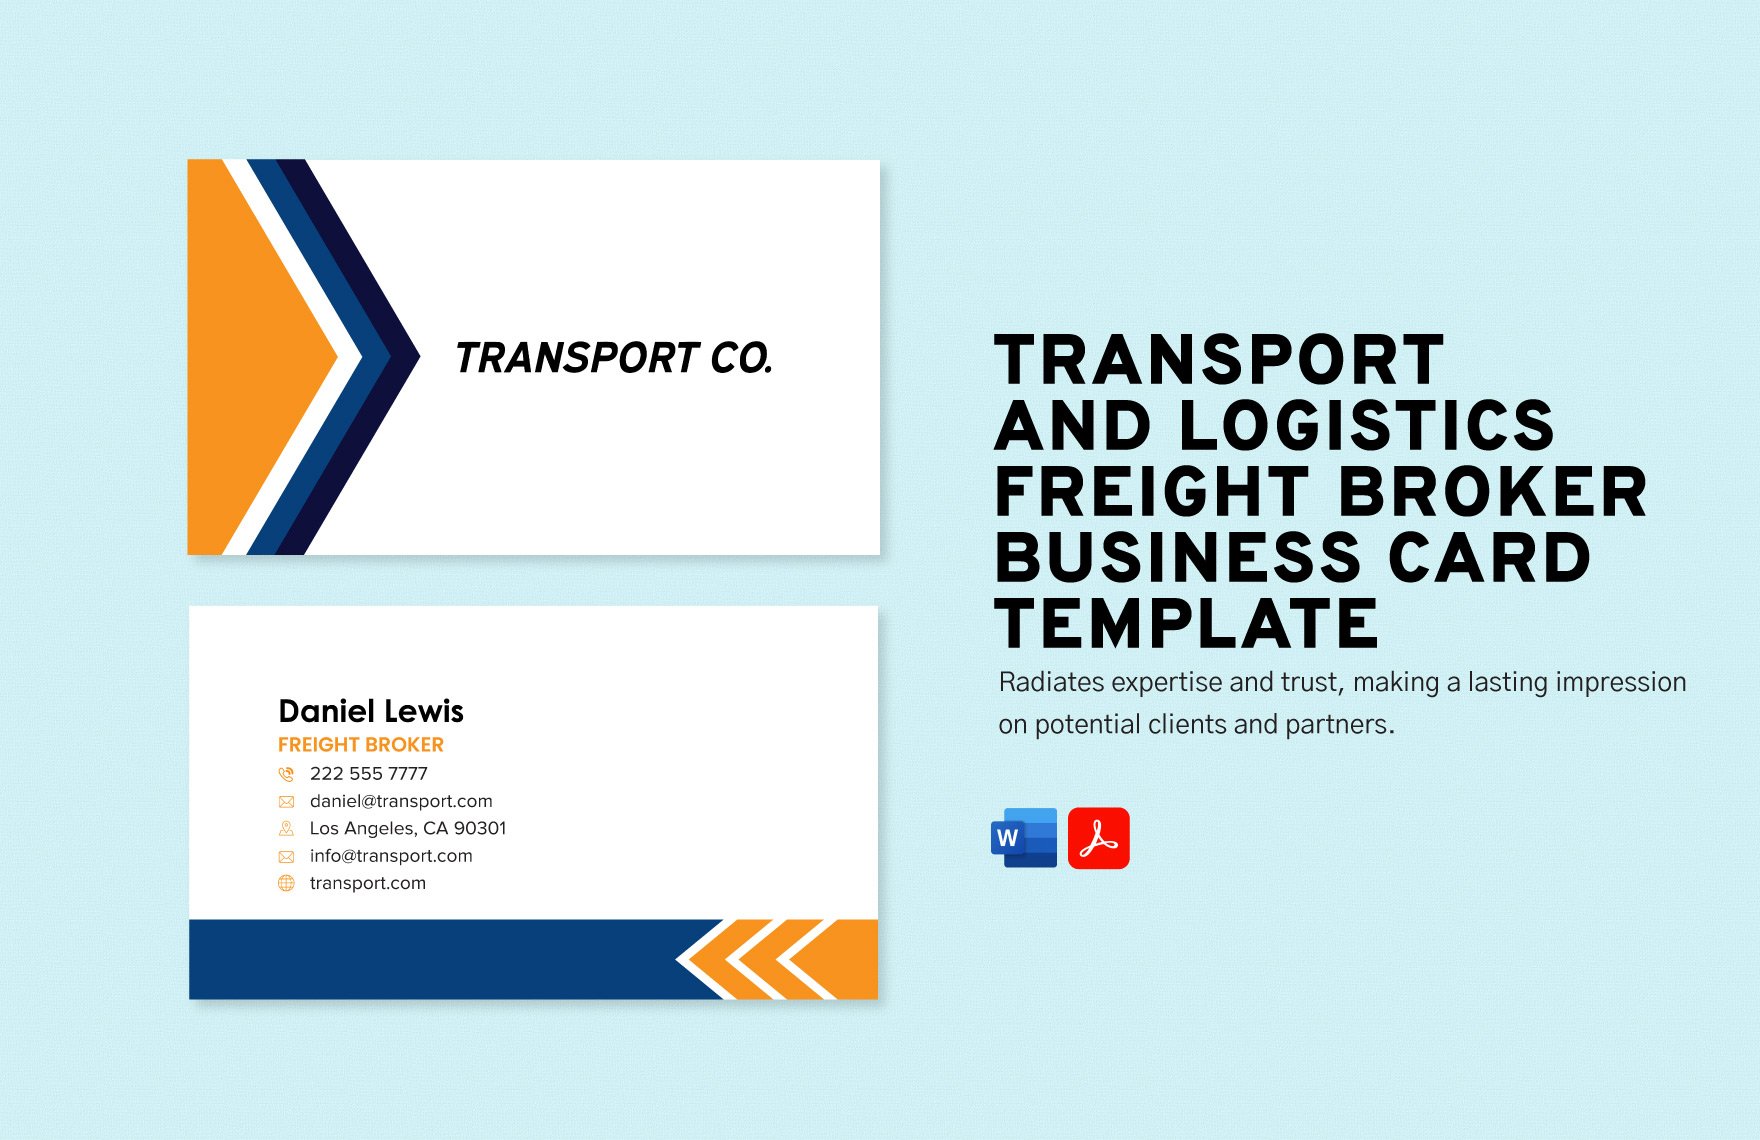 Transport and Logistics Freight Broker Business Card Design Template